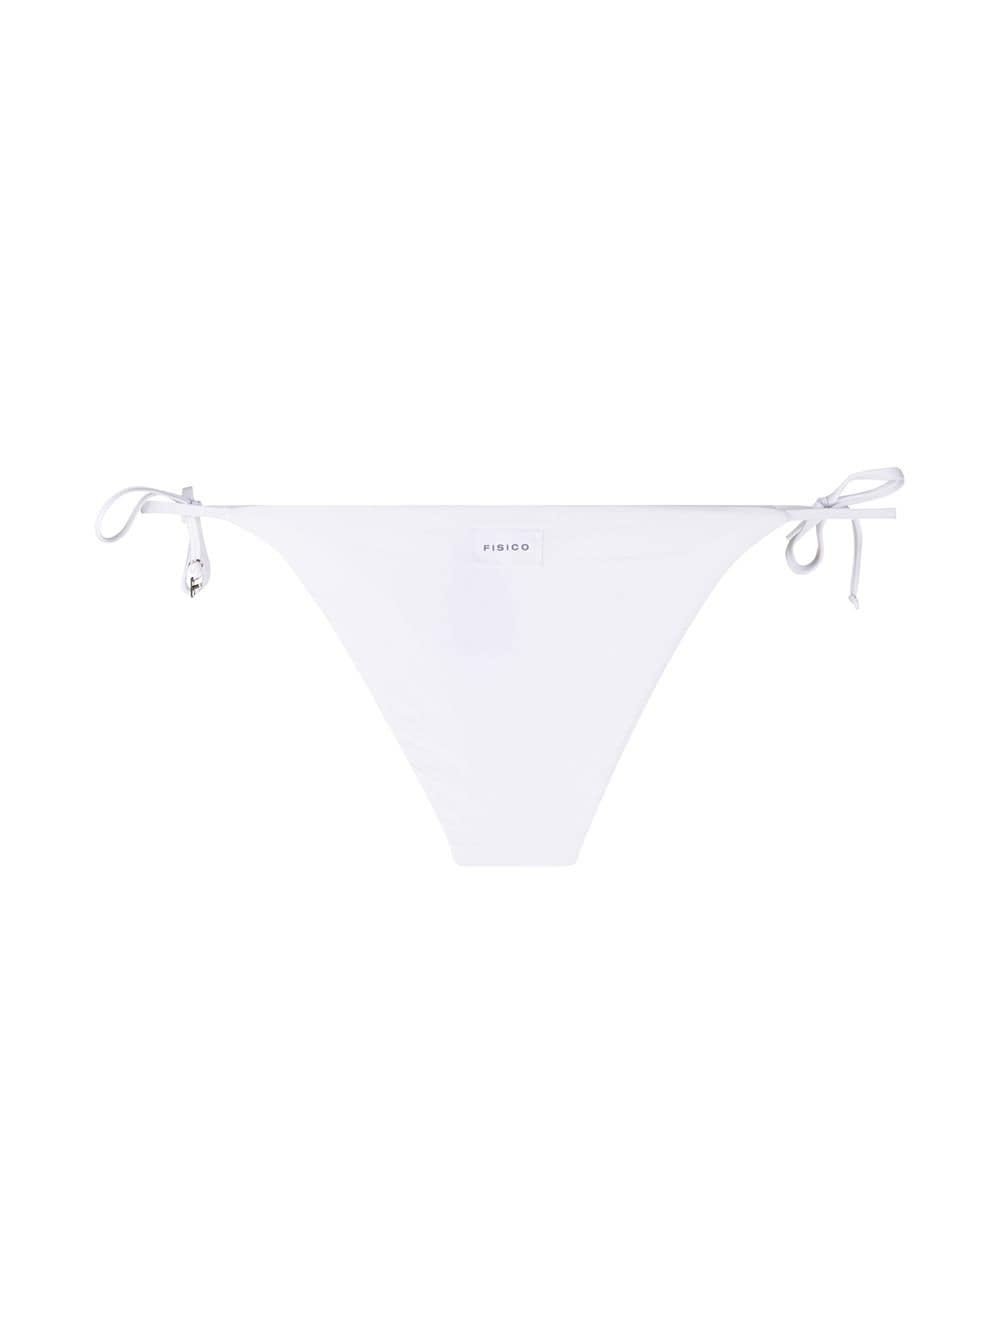 fisico logo patch bikini bottoms - white